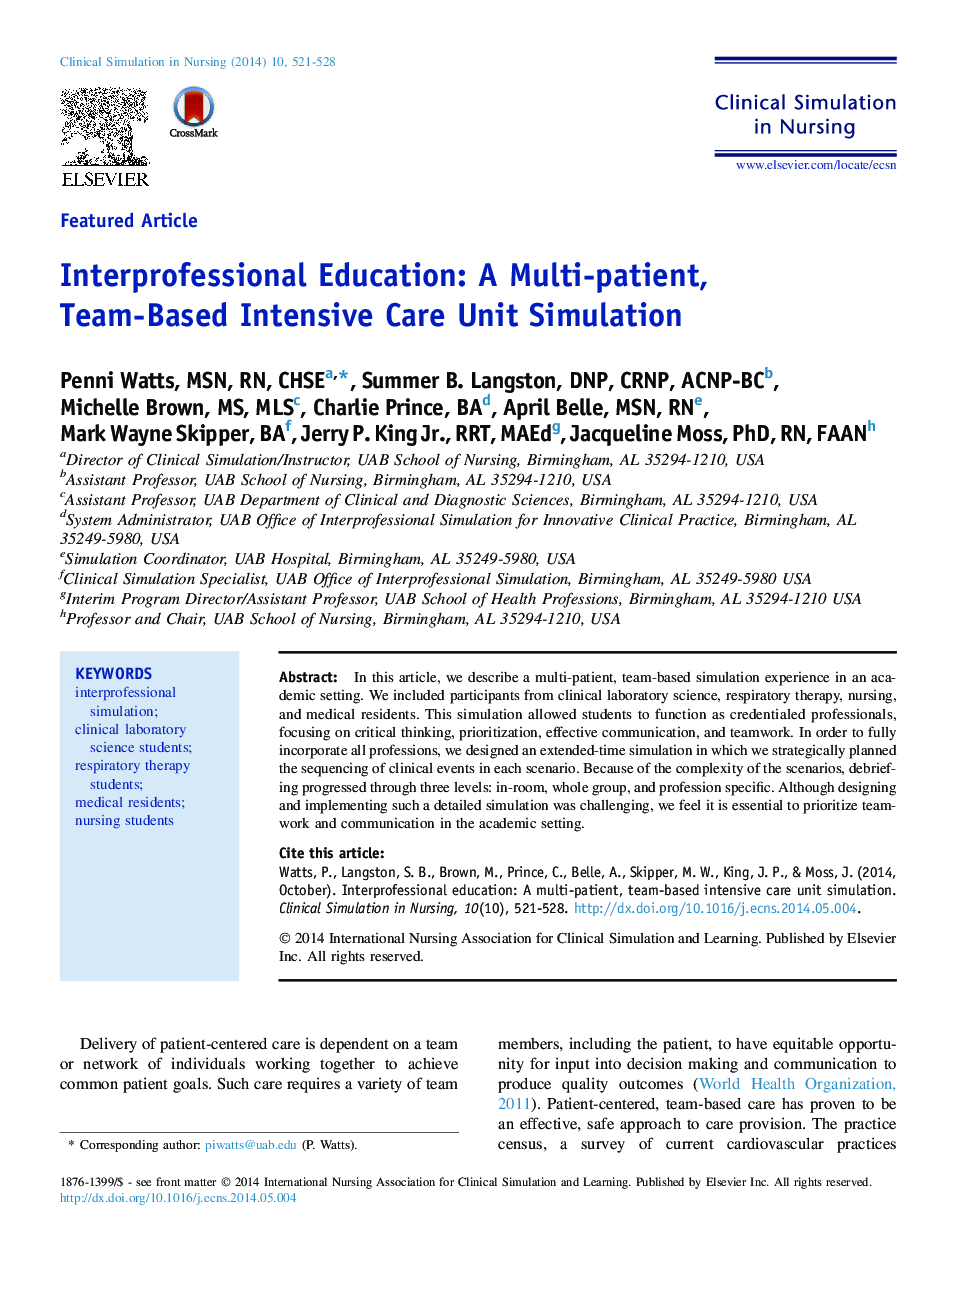 Interprofessional Education: A Multi-patient, Team-Based Intensive Care Unit Simulation